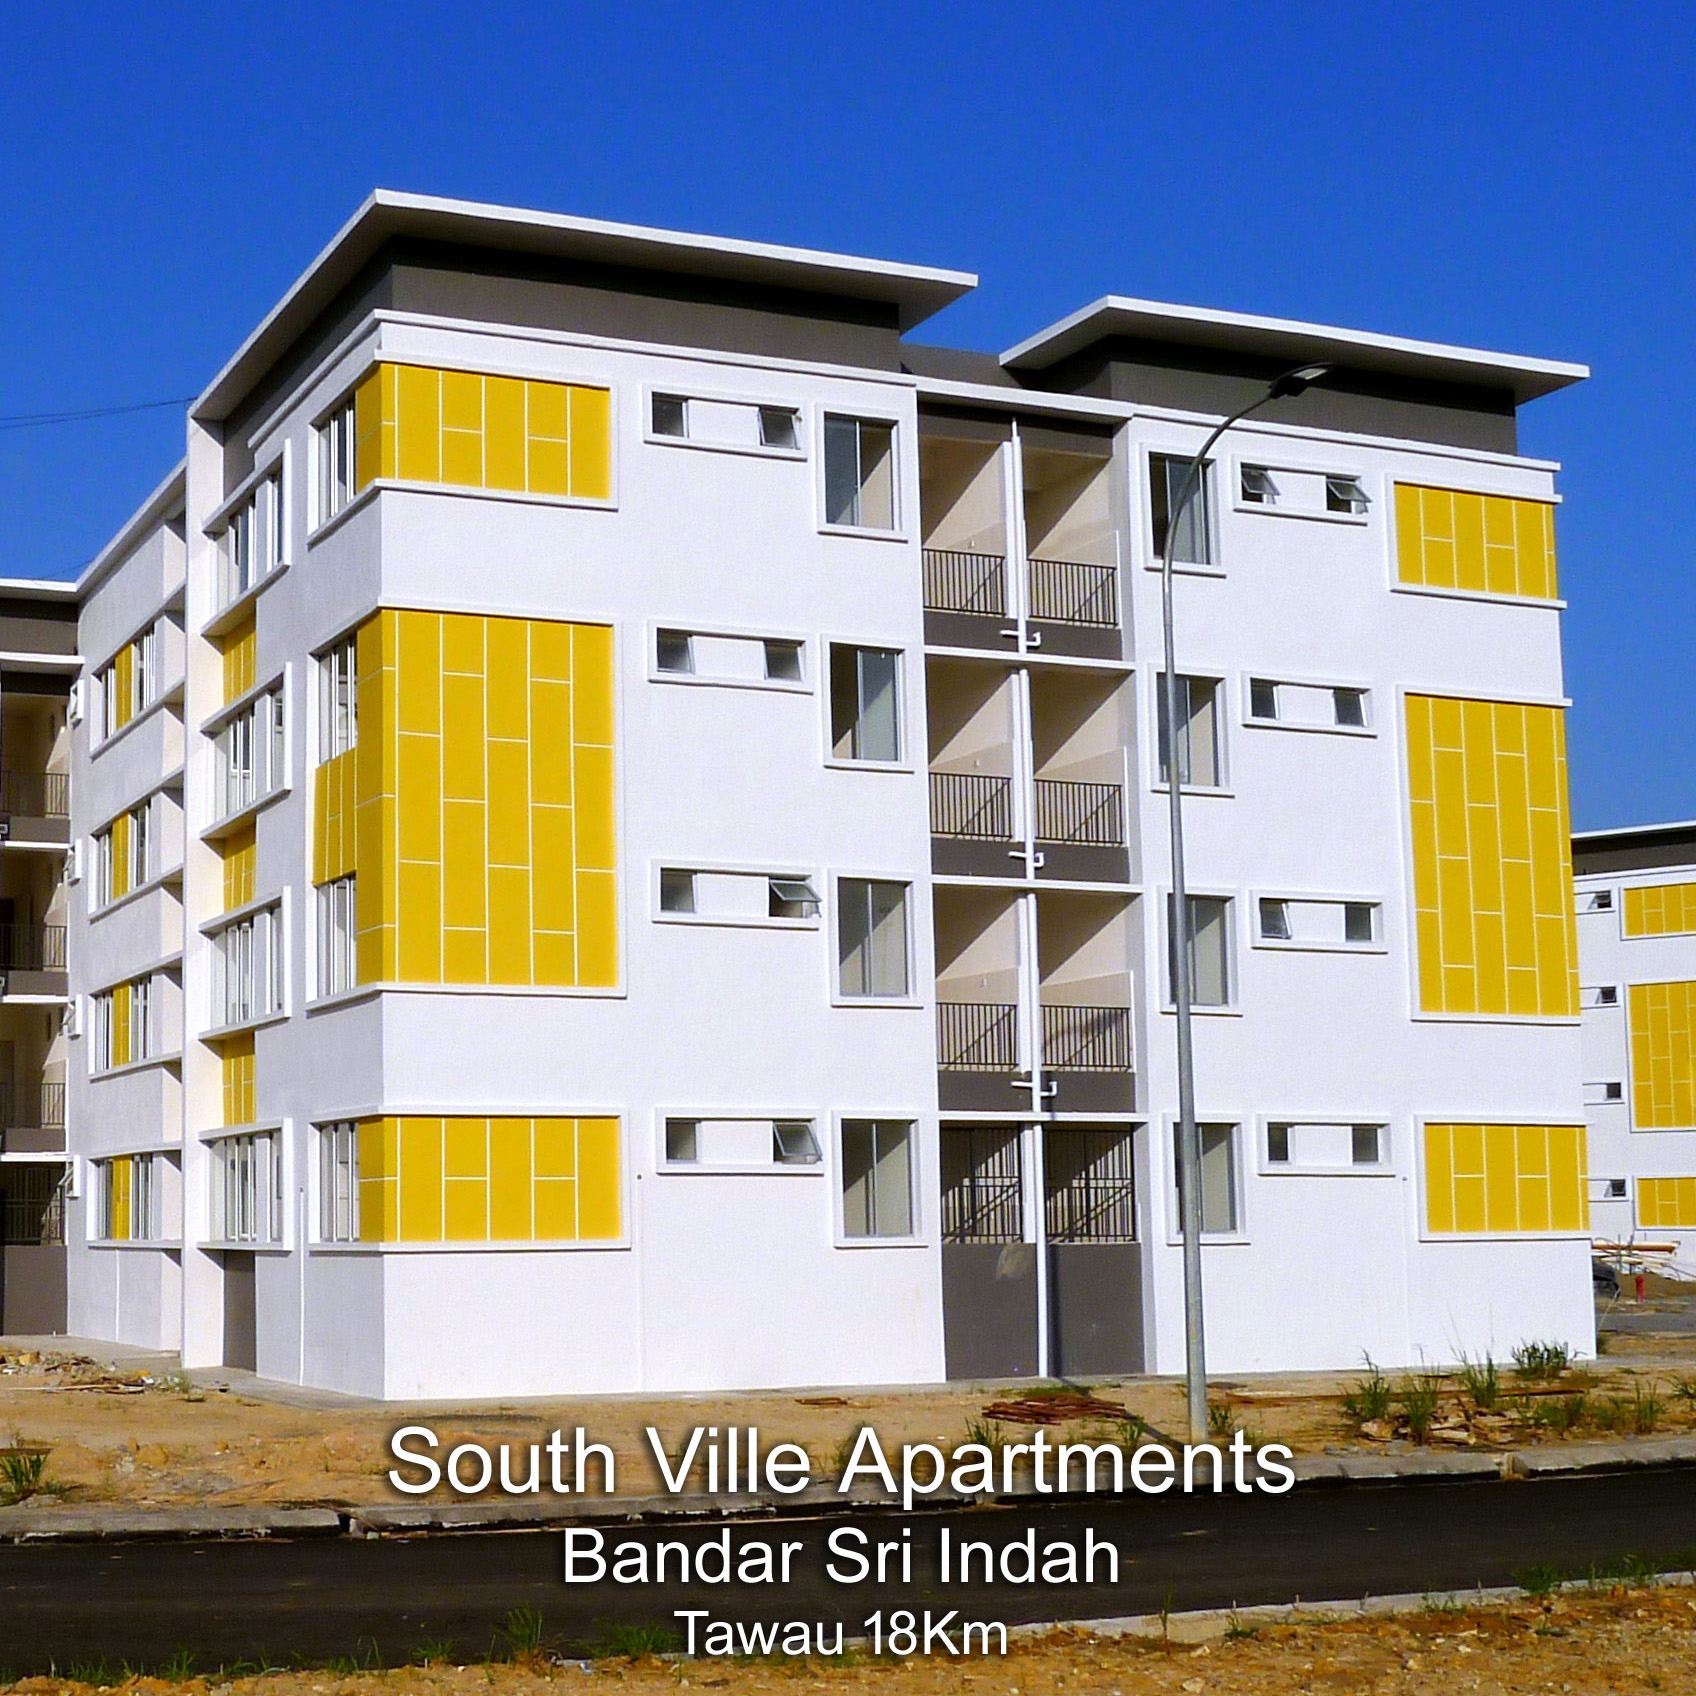 South Ville Apartments Bandar Sri Indah